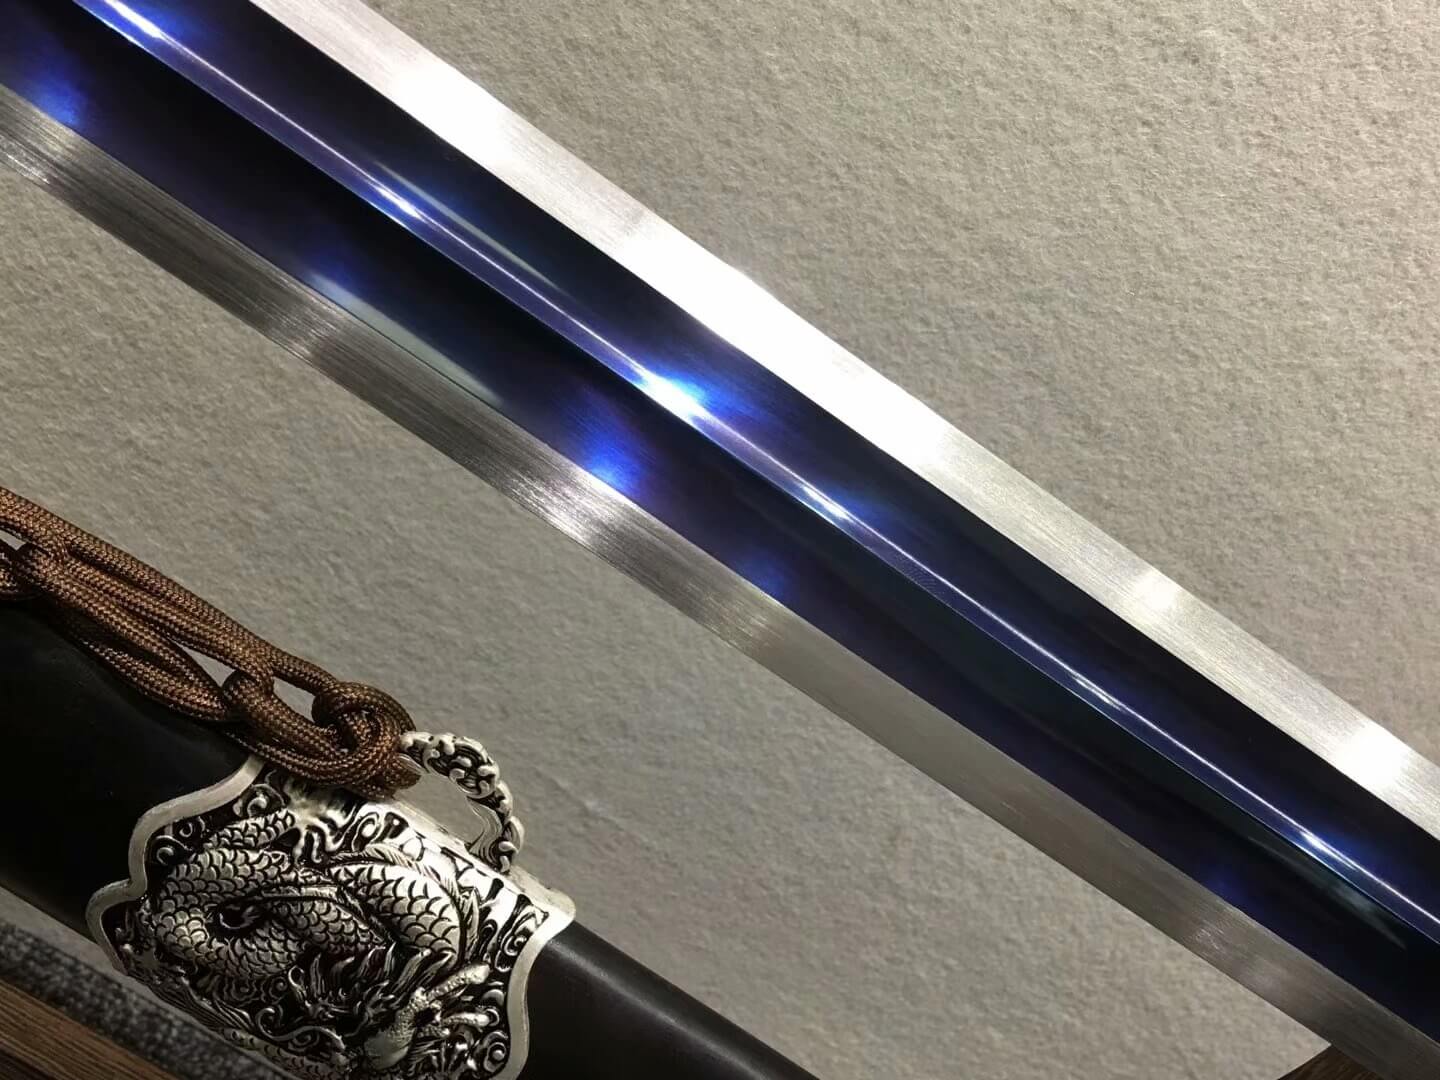 Yuewang sword,High carbon steel blue blade,Black wood,Alloy fittings - Chinese sword shop